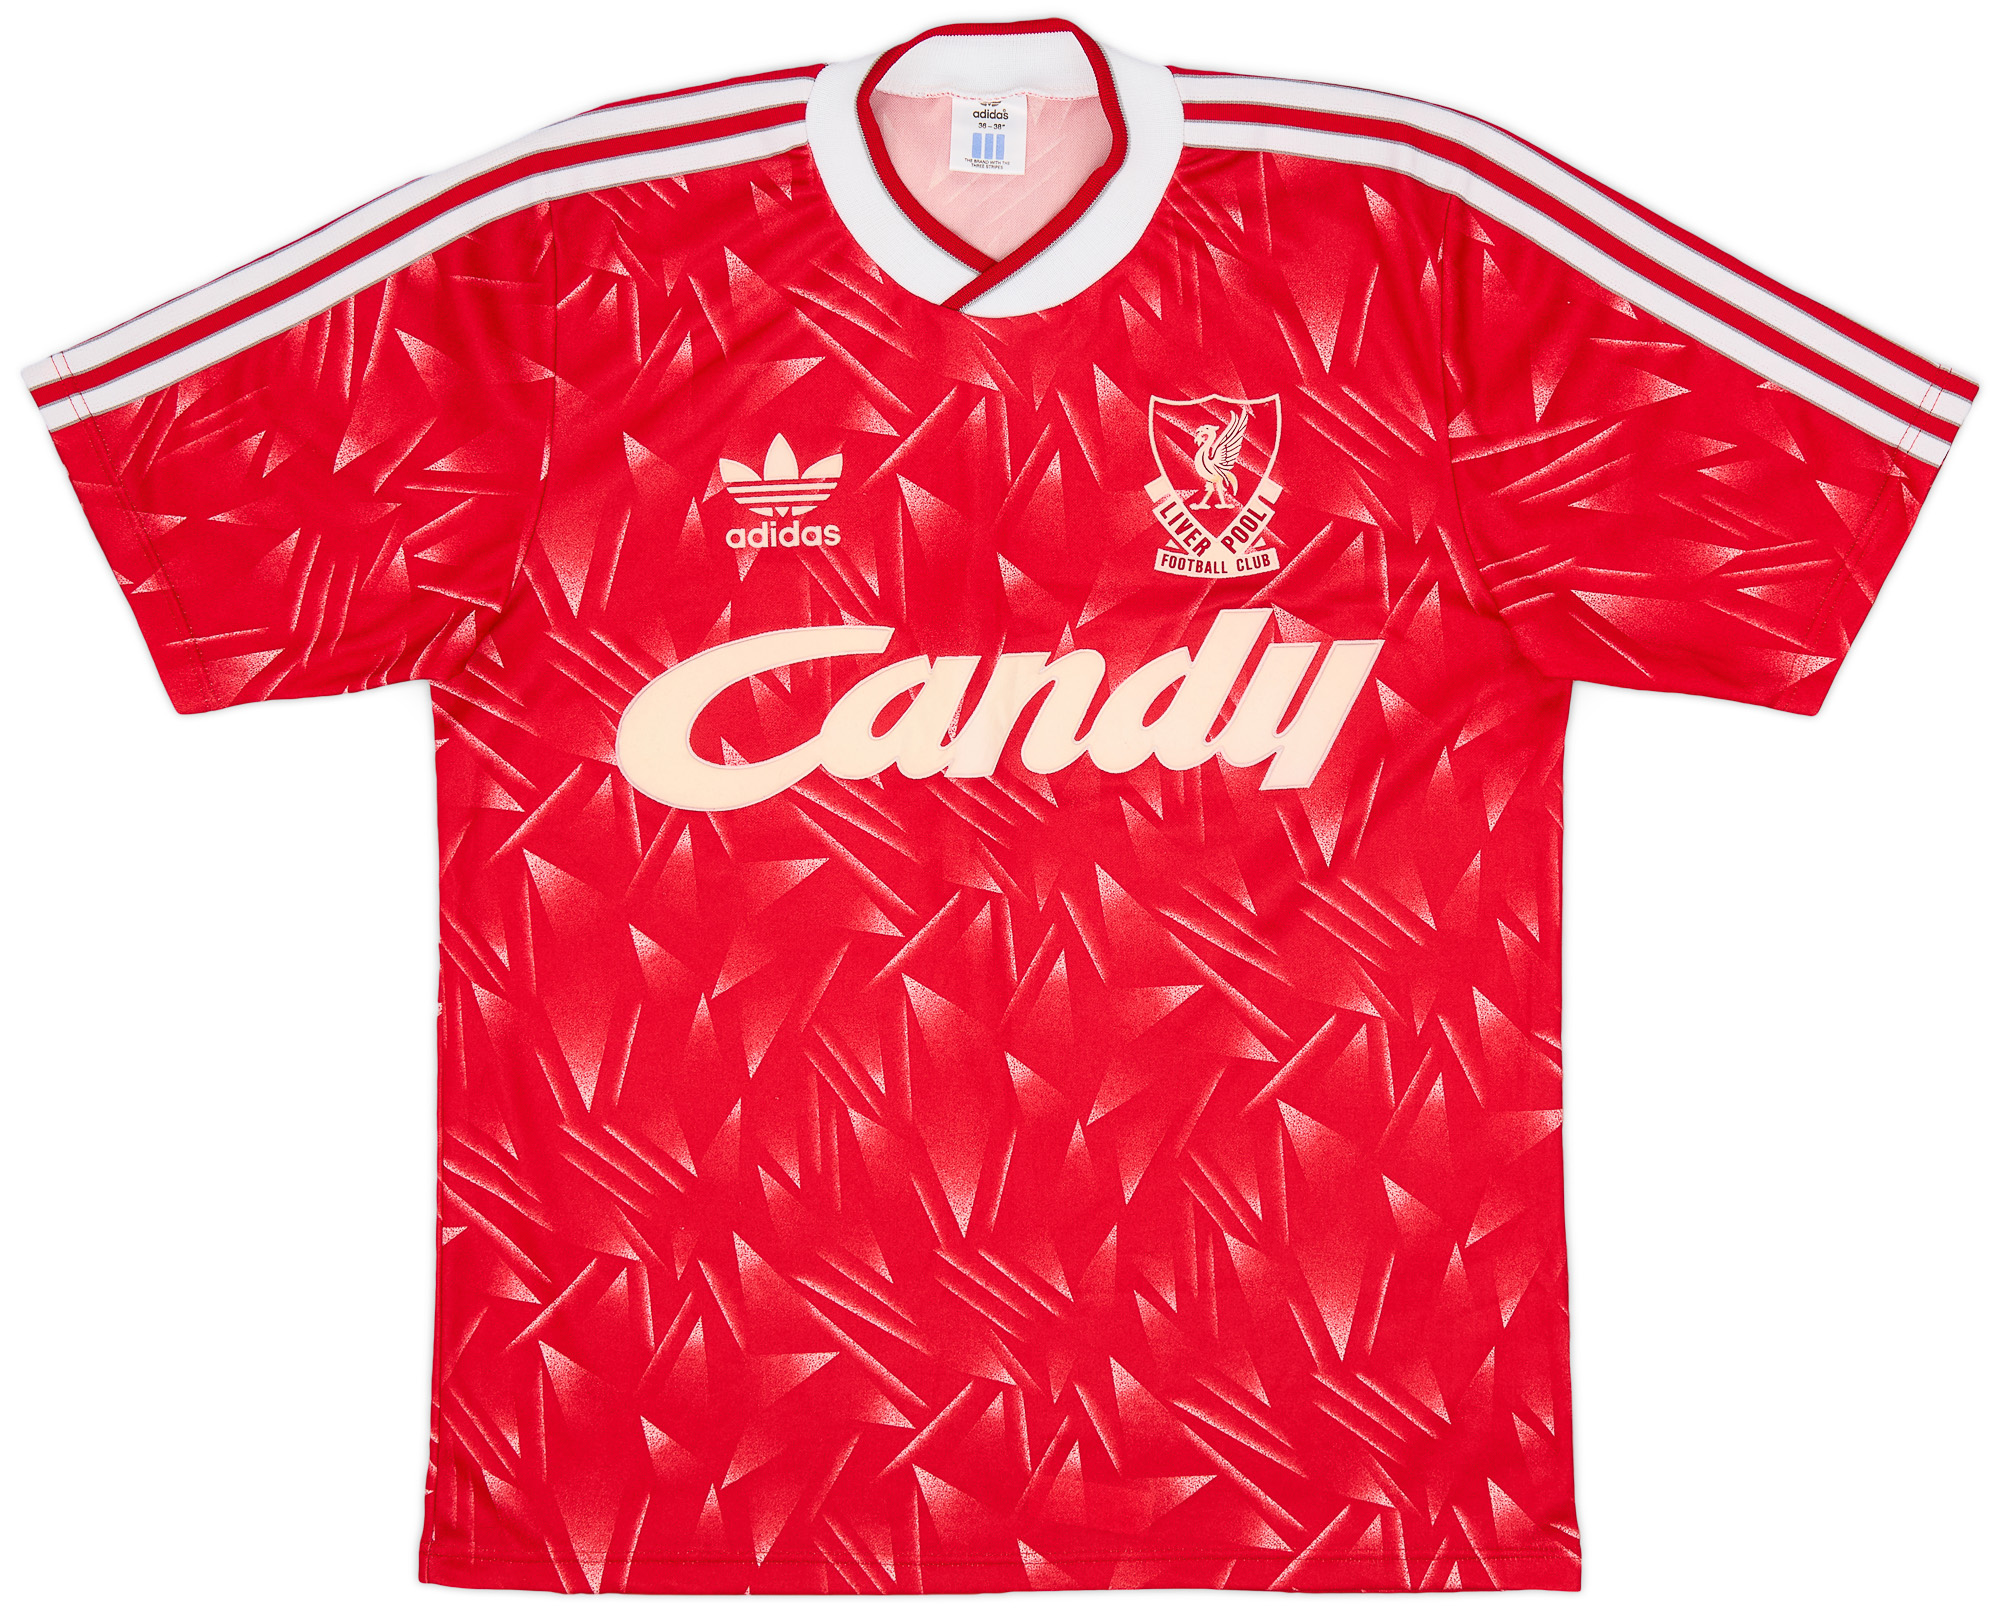 1989-91 Liverpool Home Shirt - 8/10 - (/)